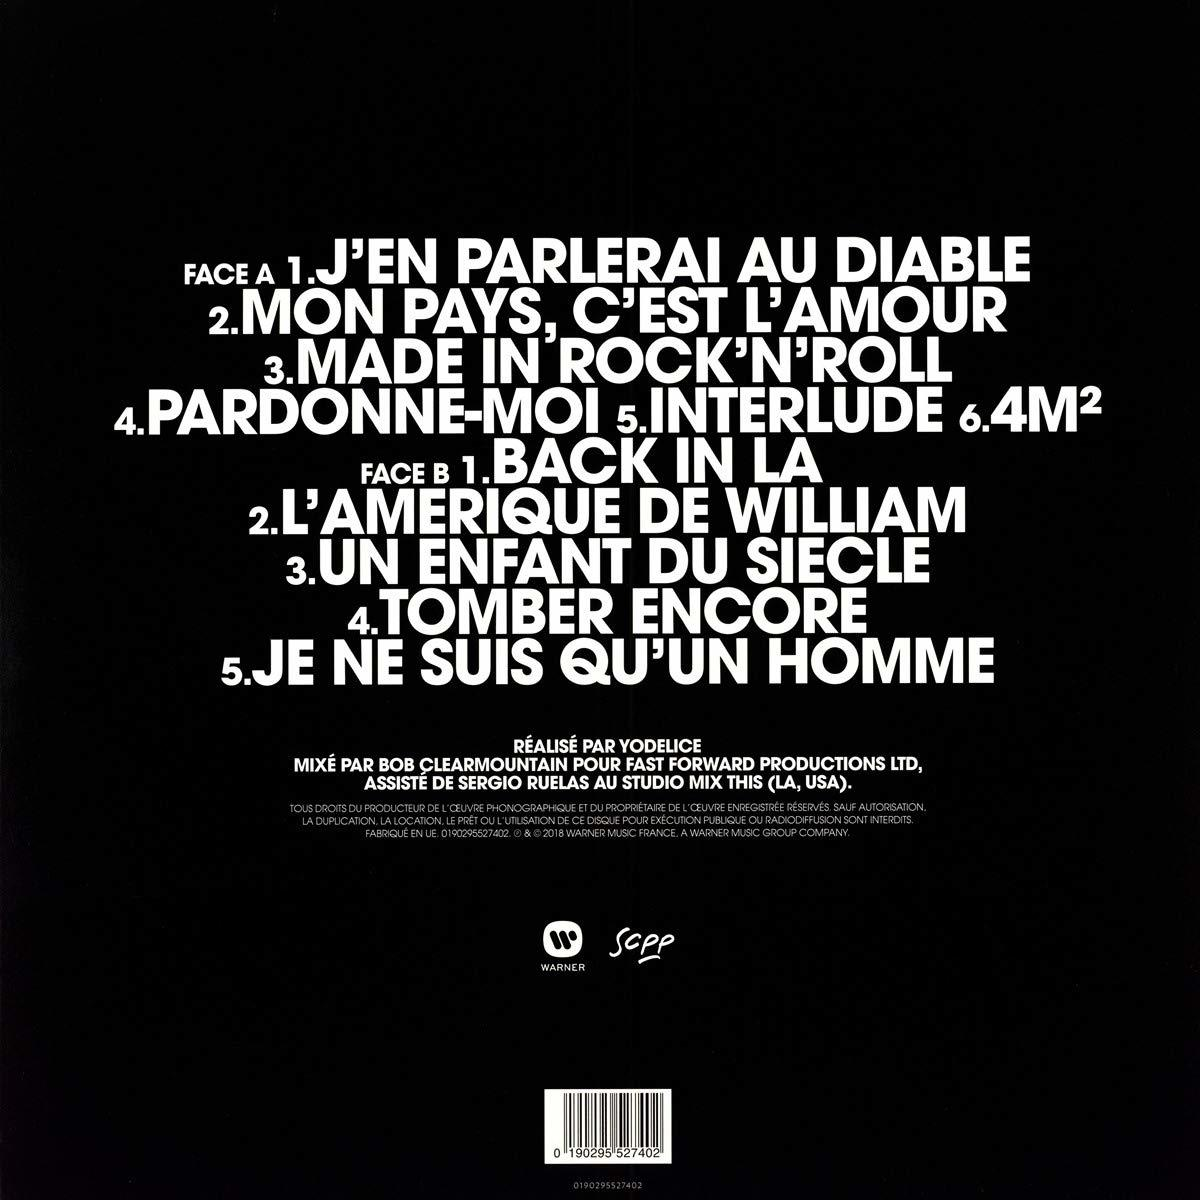 Johnny Hallyday - Mon C\'est pays l\'amour - (Vinyl)